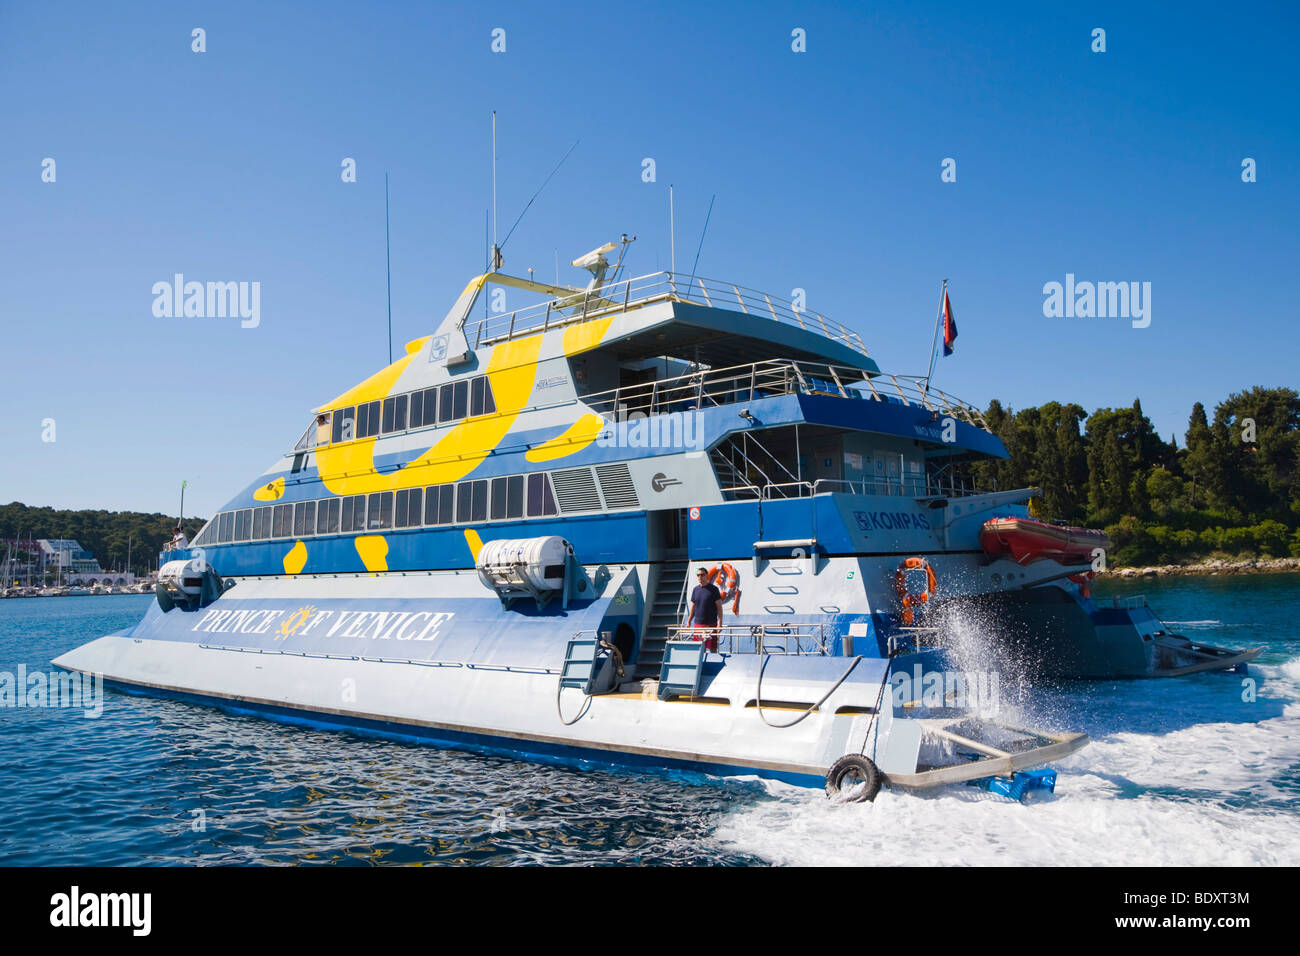 Prince of Venice catamaran in the southern harbour of Rovinj heading for Venice, Istria, Croatia, Europe Stock Photo